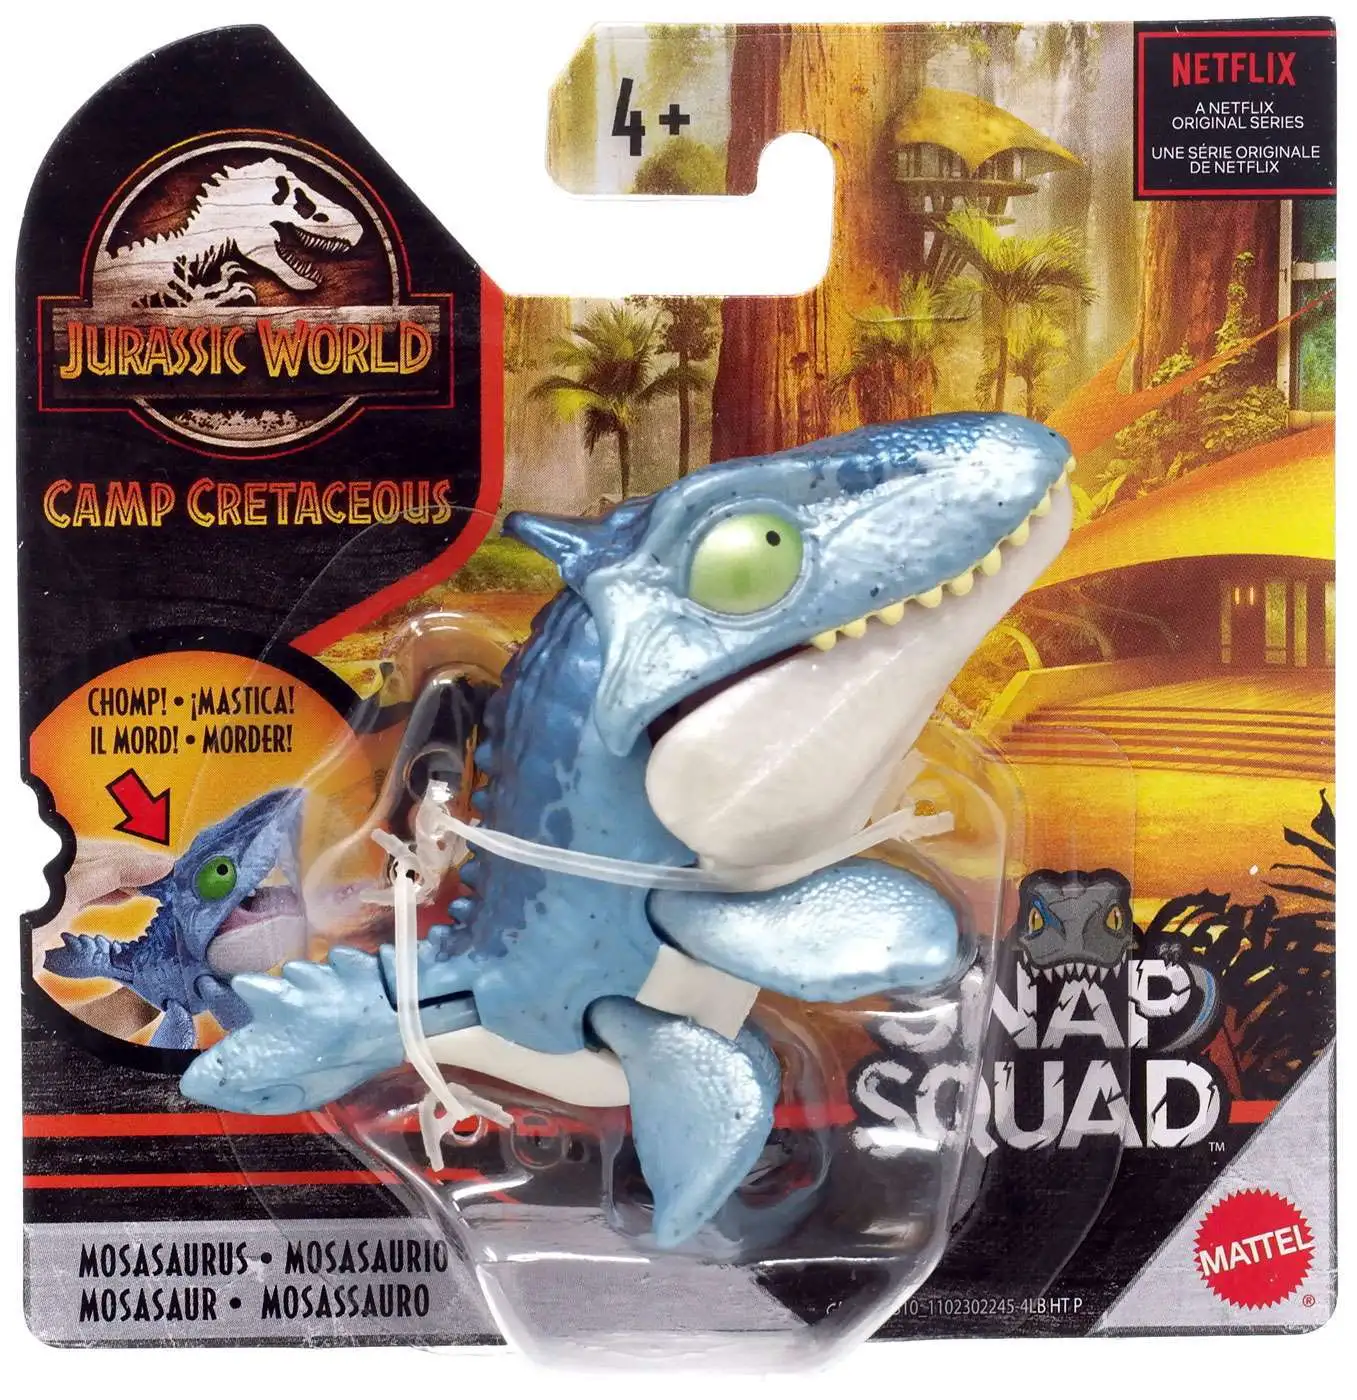 Jurassic World Snap Squad Camp Cretaceous Metallic Netflix Wave 7 Set 4 Dinosaur 